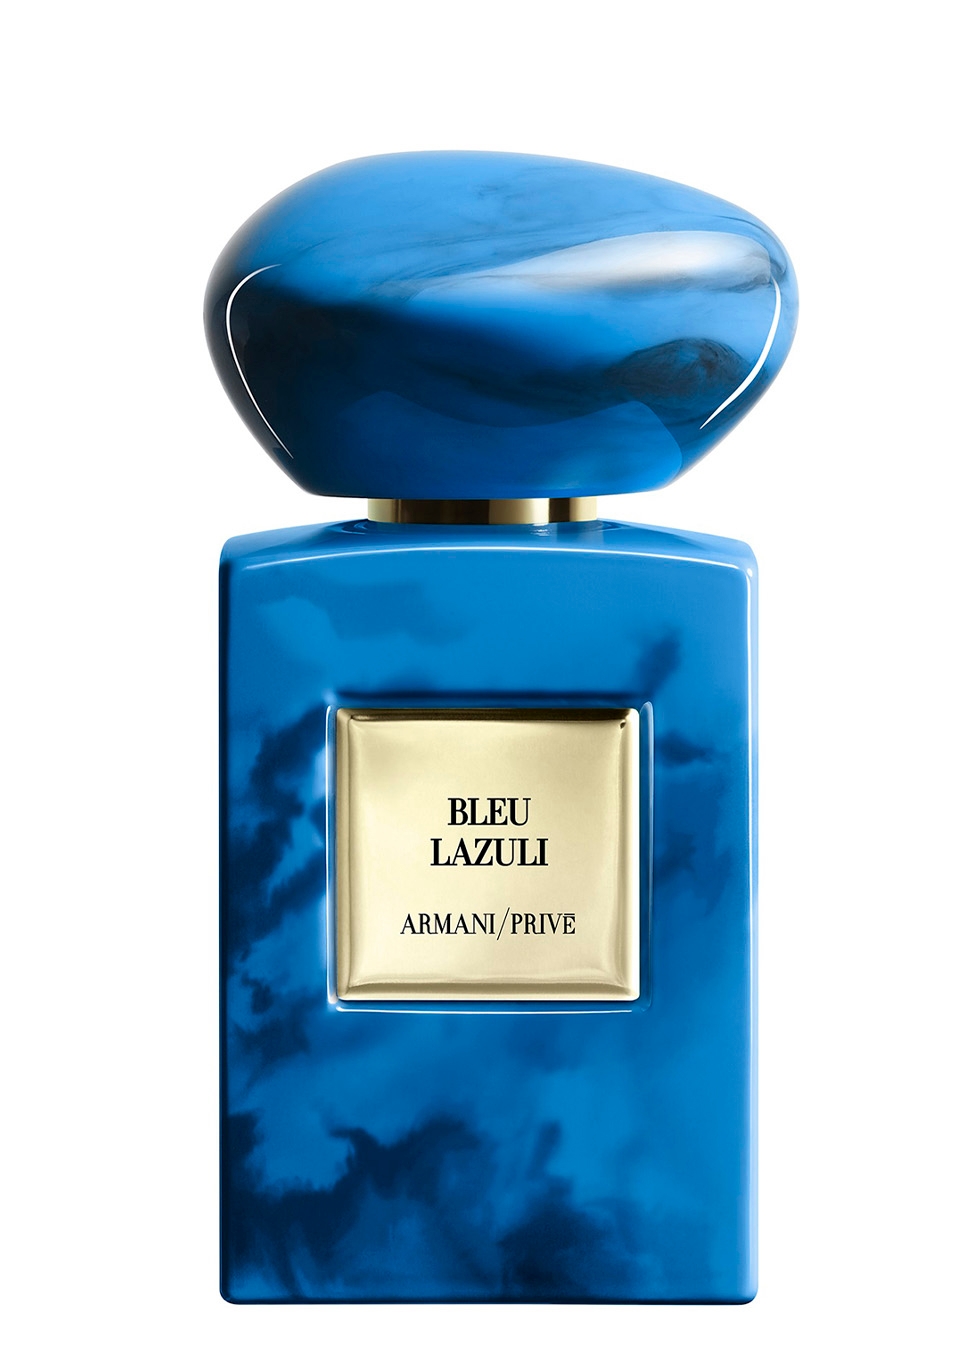 bleu lazuli armani